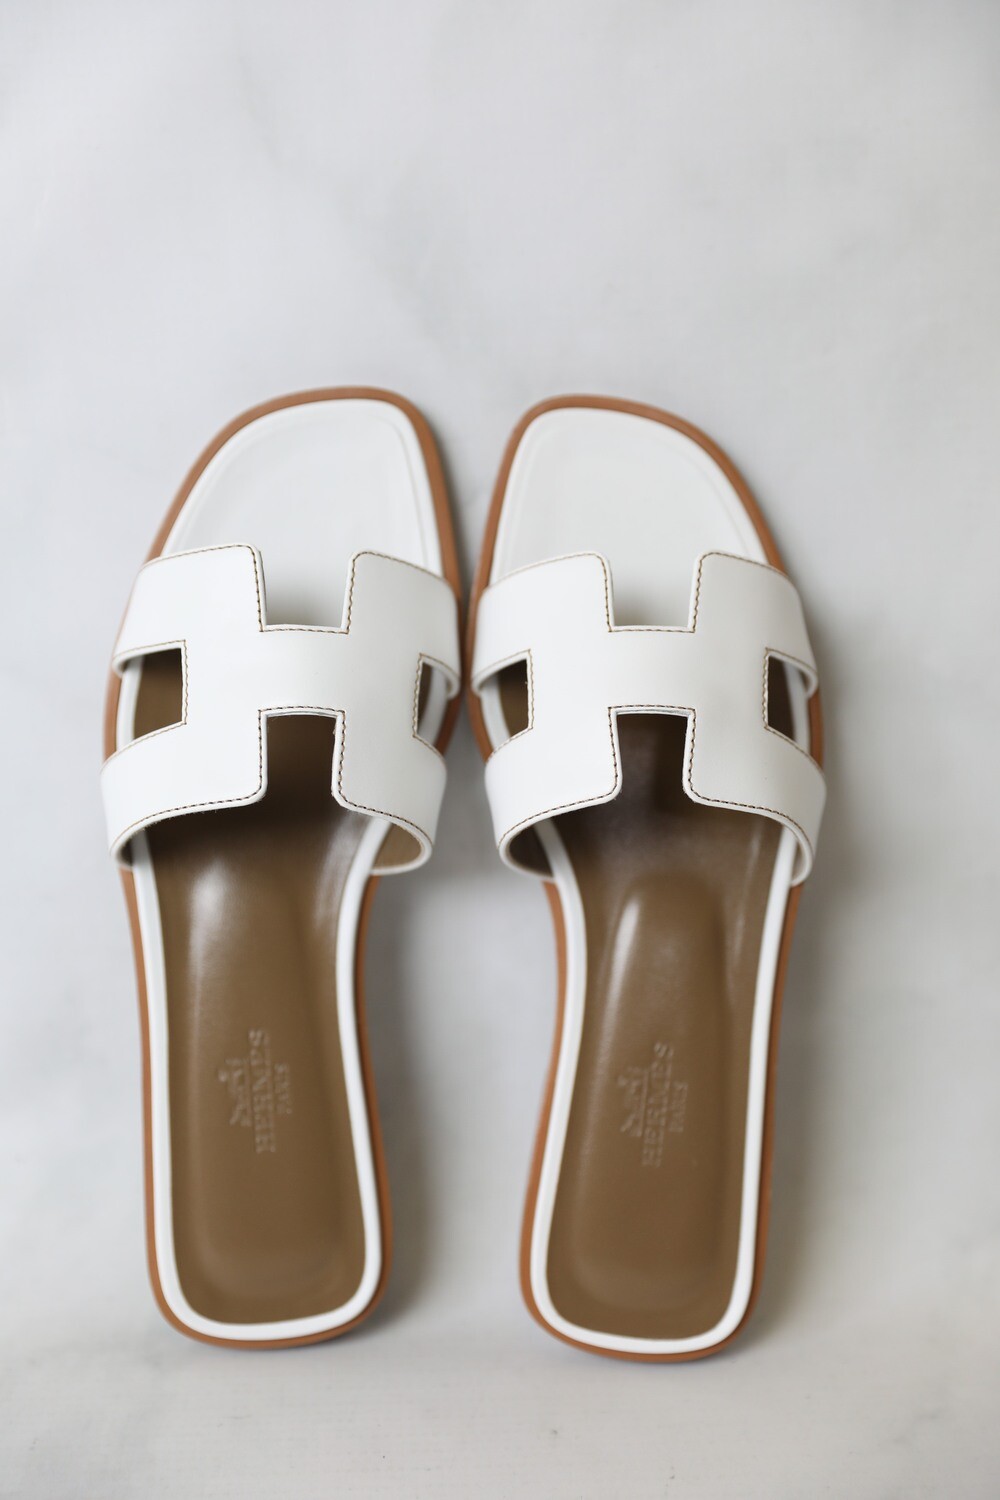 En effektiv underviser Mellemøsten Hermes Shoes Oran Sandals, White, Size 36, New in Box WA001